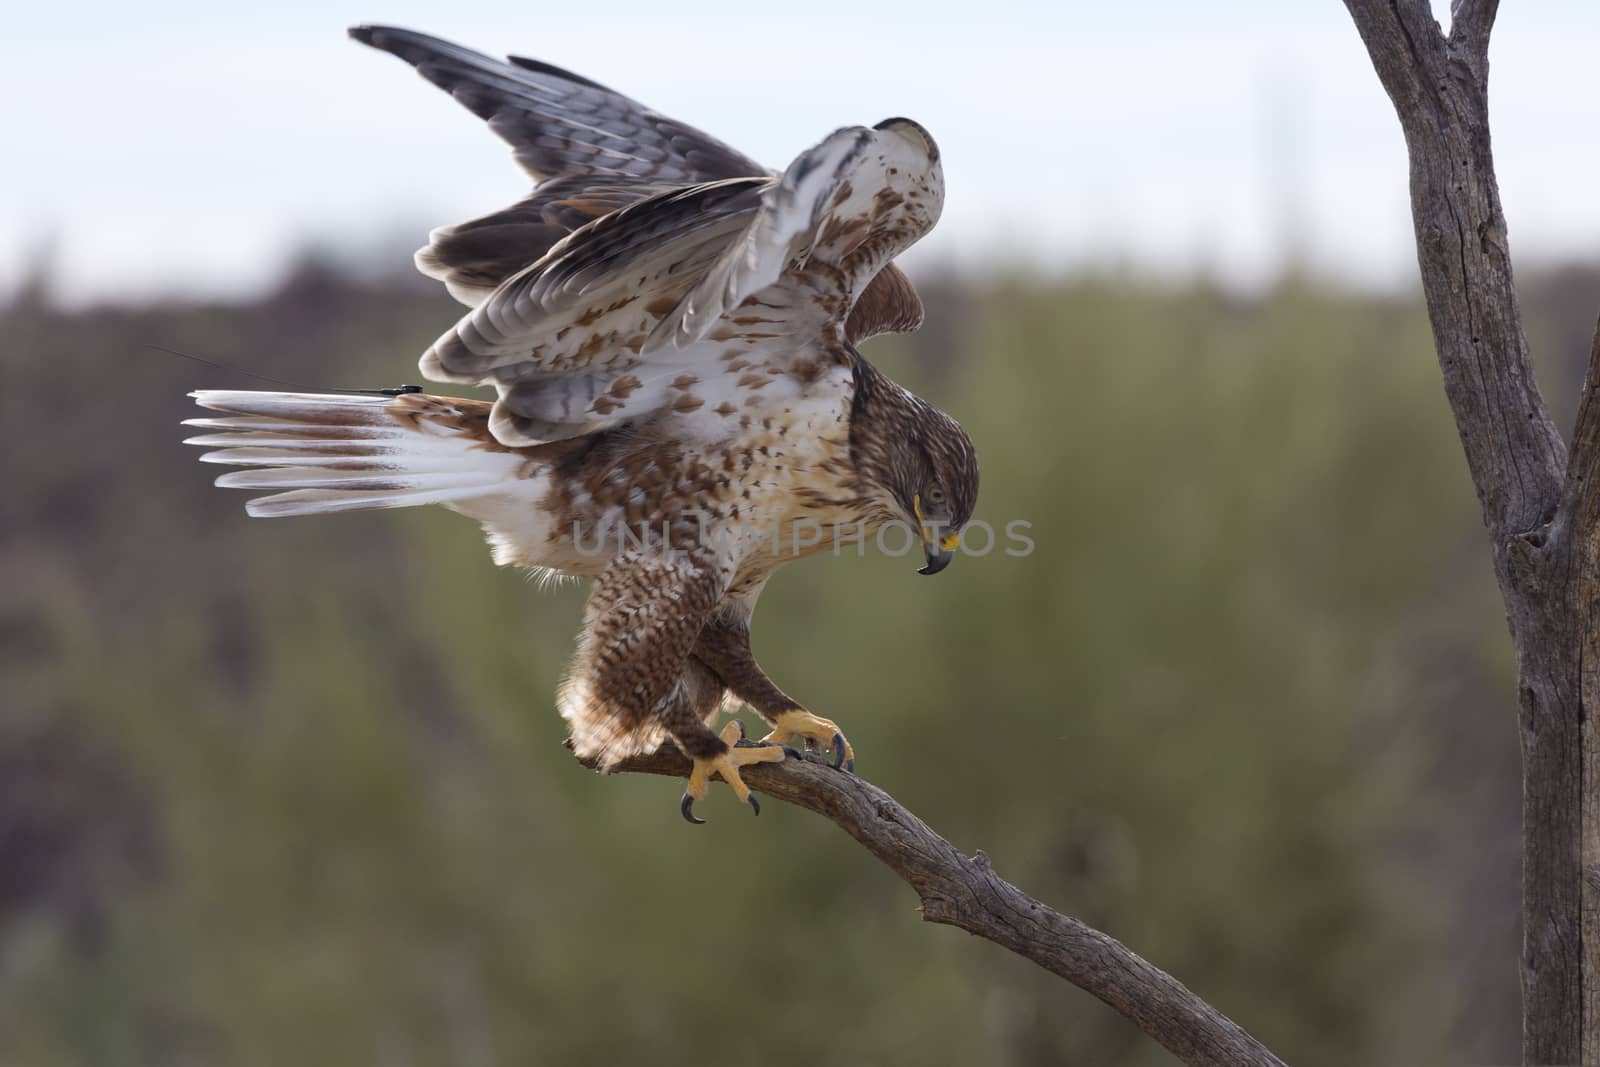 Ferruginous hawk balances with wings partially open on tree limb in Arizona.  Location is Tucson at Free Flight demonstration of Arizona Sonora Desert Museum.  